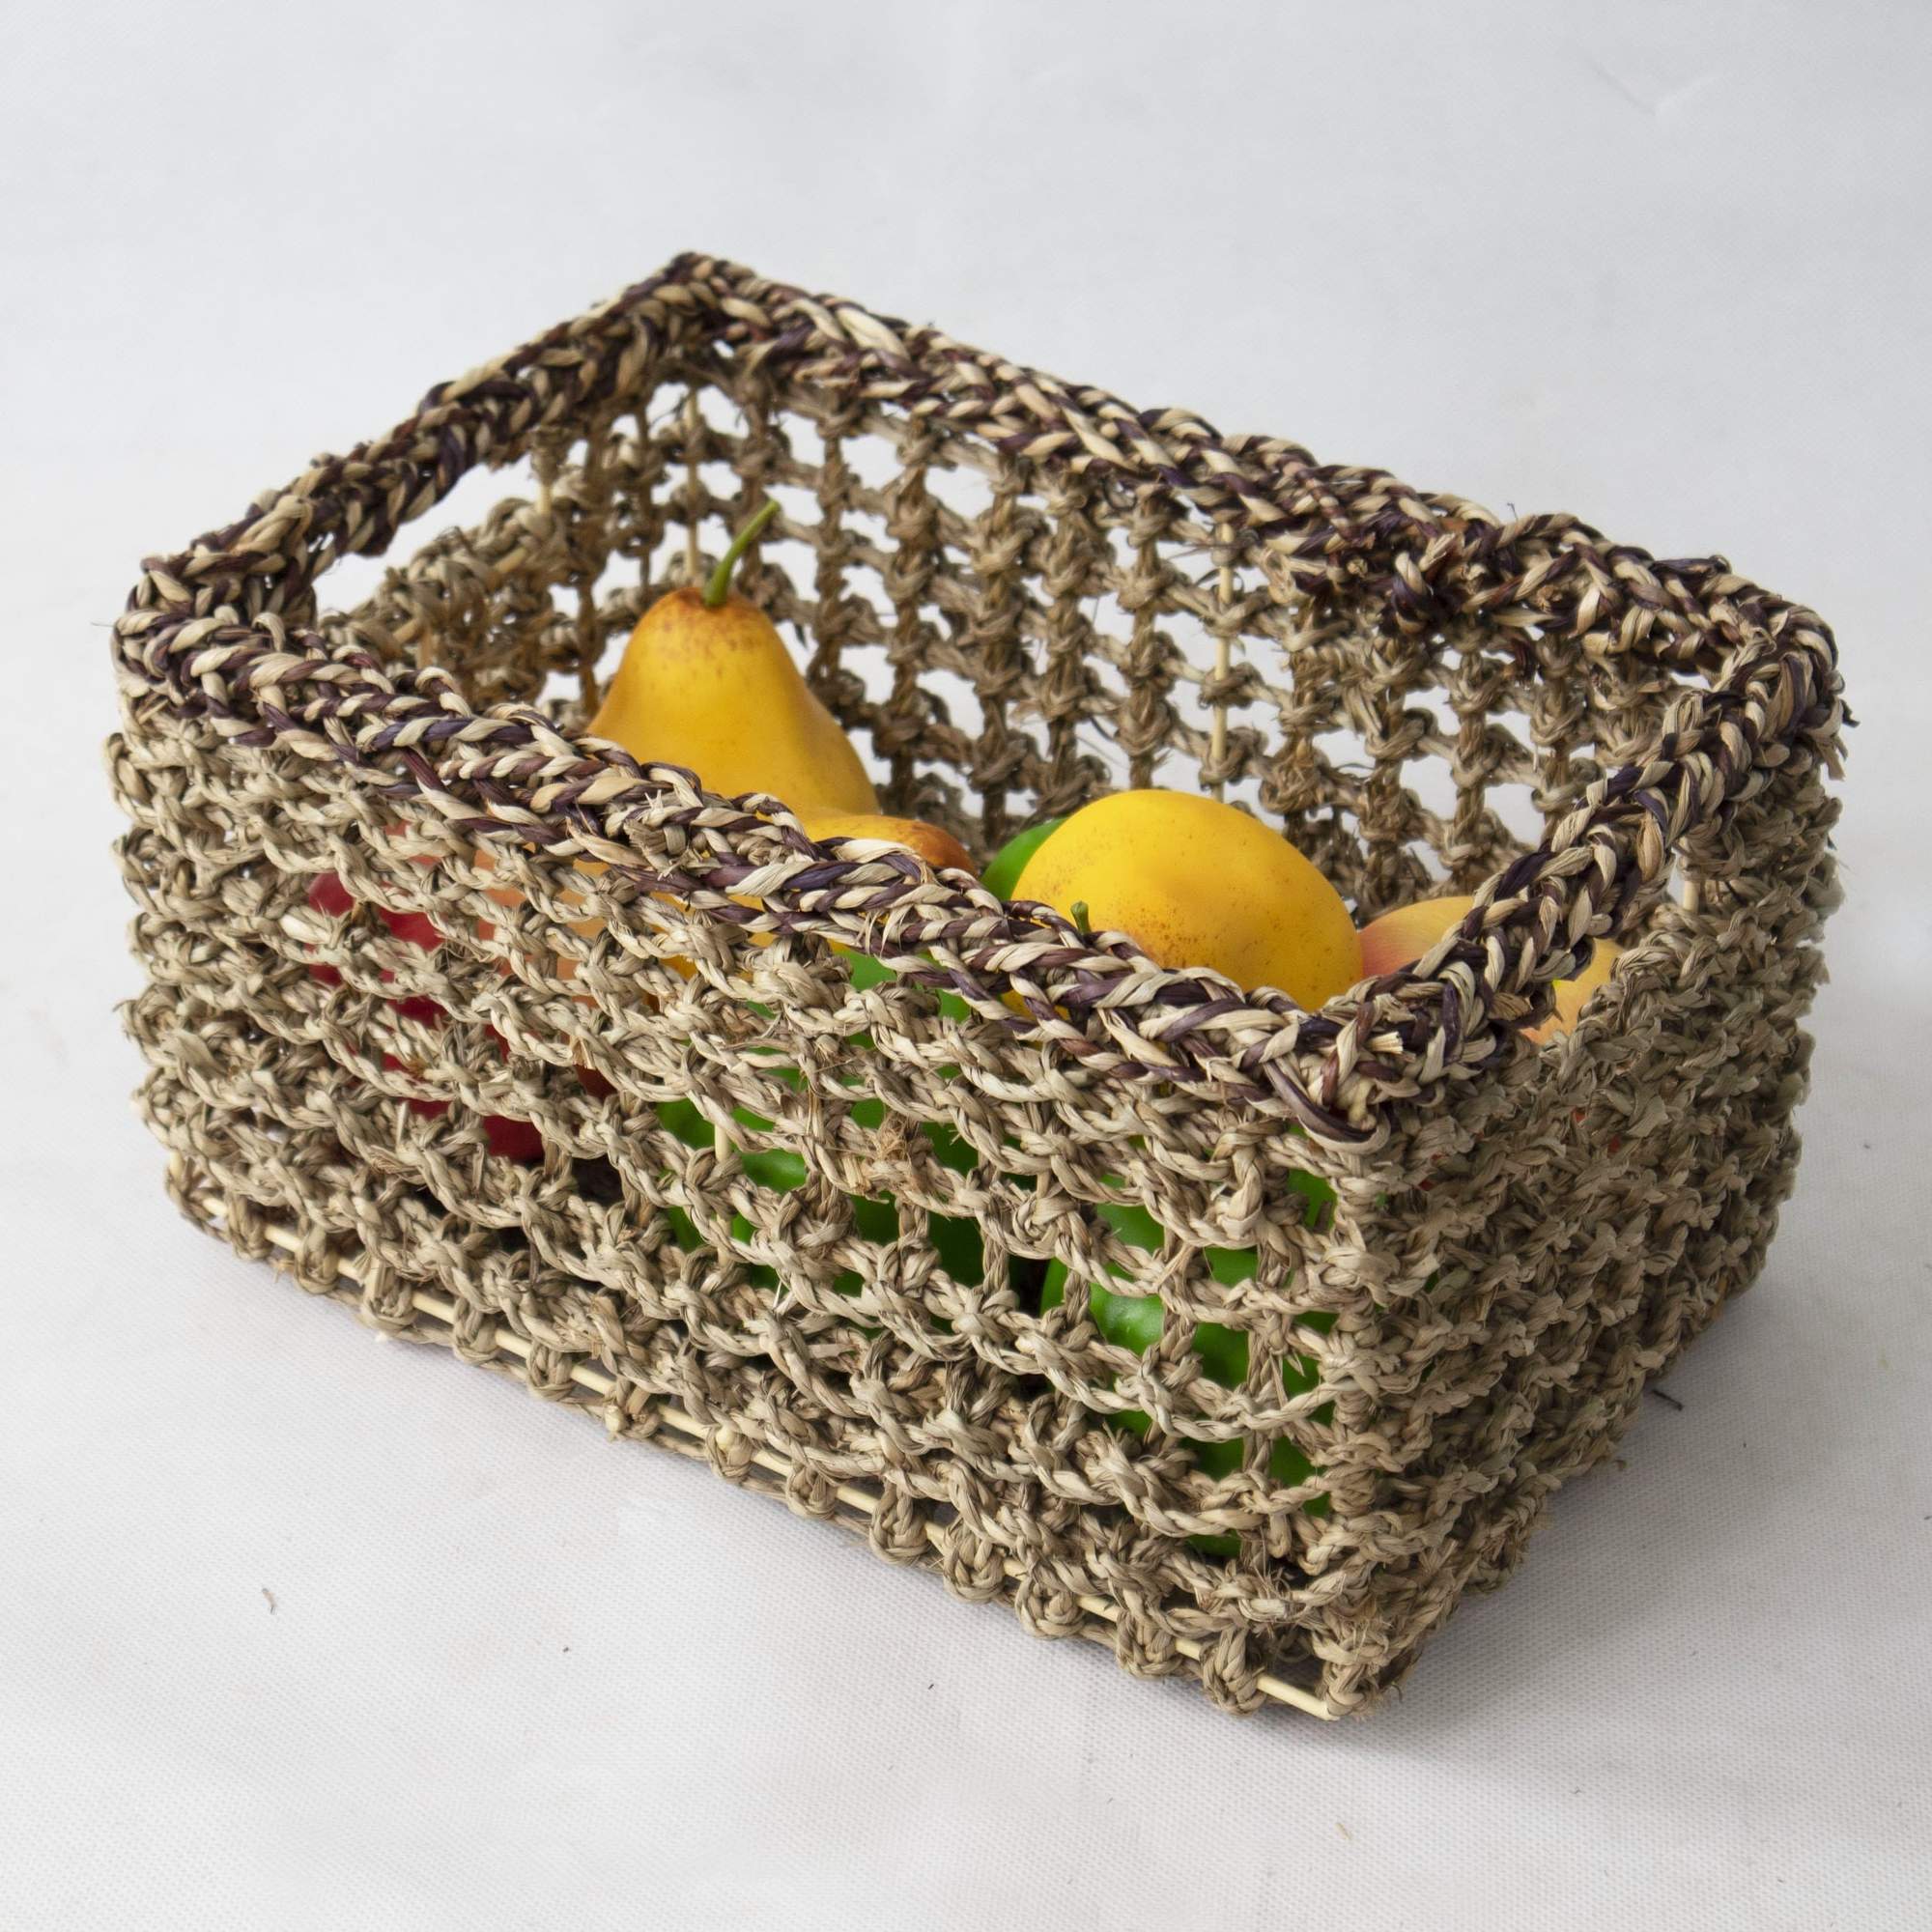 Large Woven Basket for Nursery/Closet